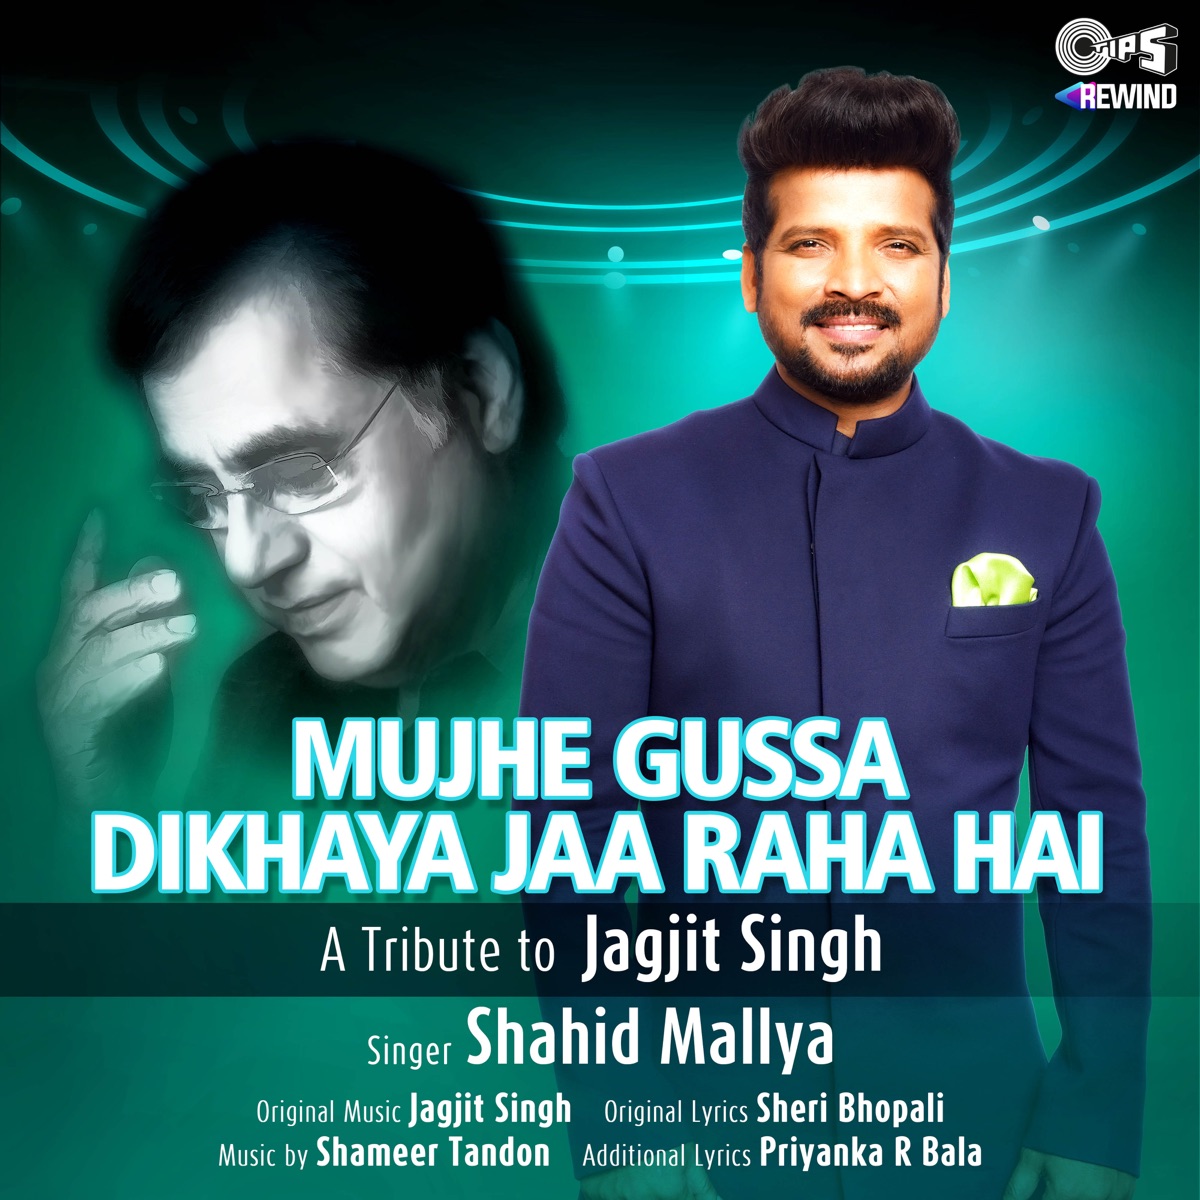 Mujhe Gussa Dikhaya Jaa Raha Hai (Tips Rewind: A Tribute to Jagjit Singh) -  Single by Shahid Mallya on Apple Music